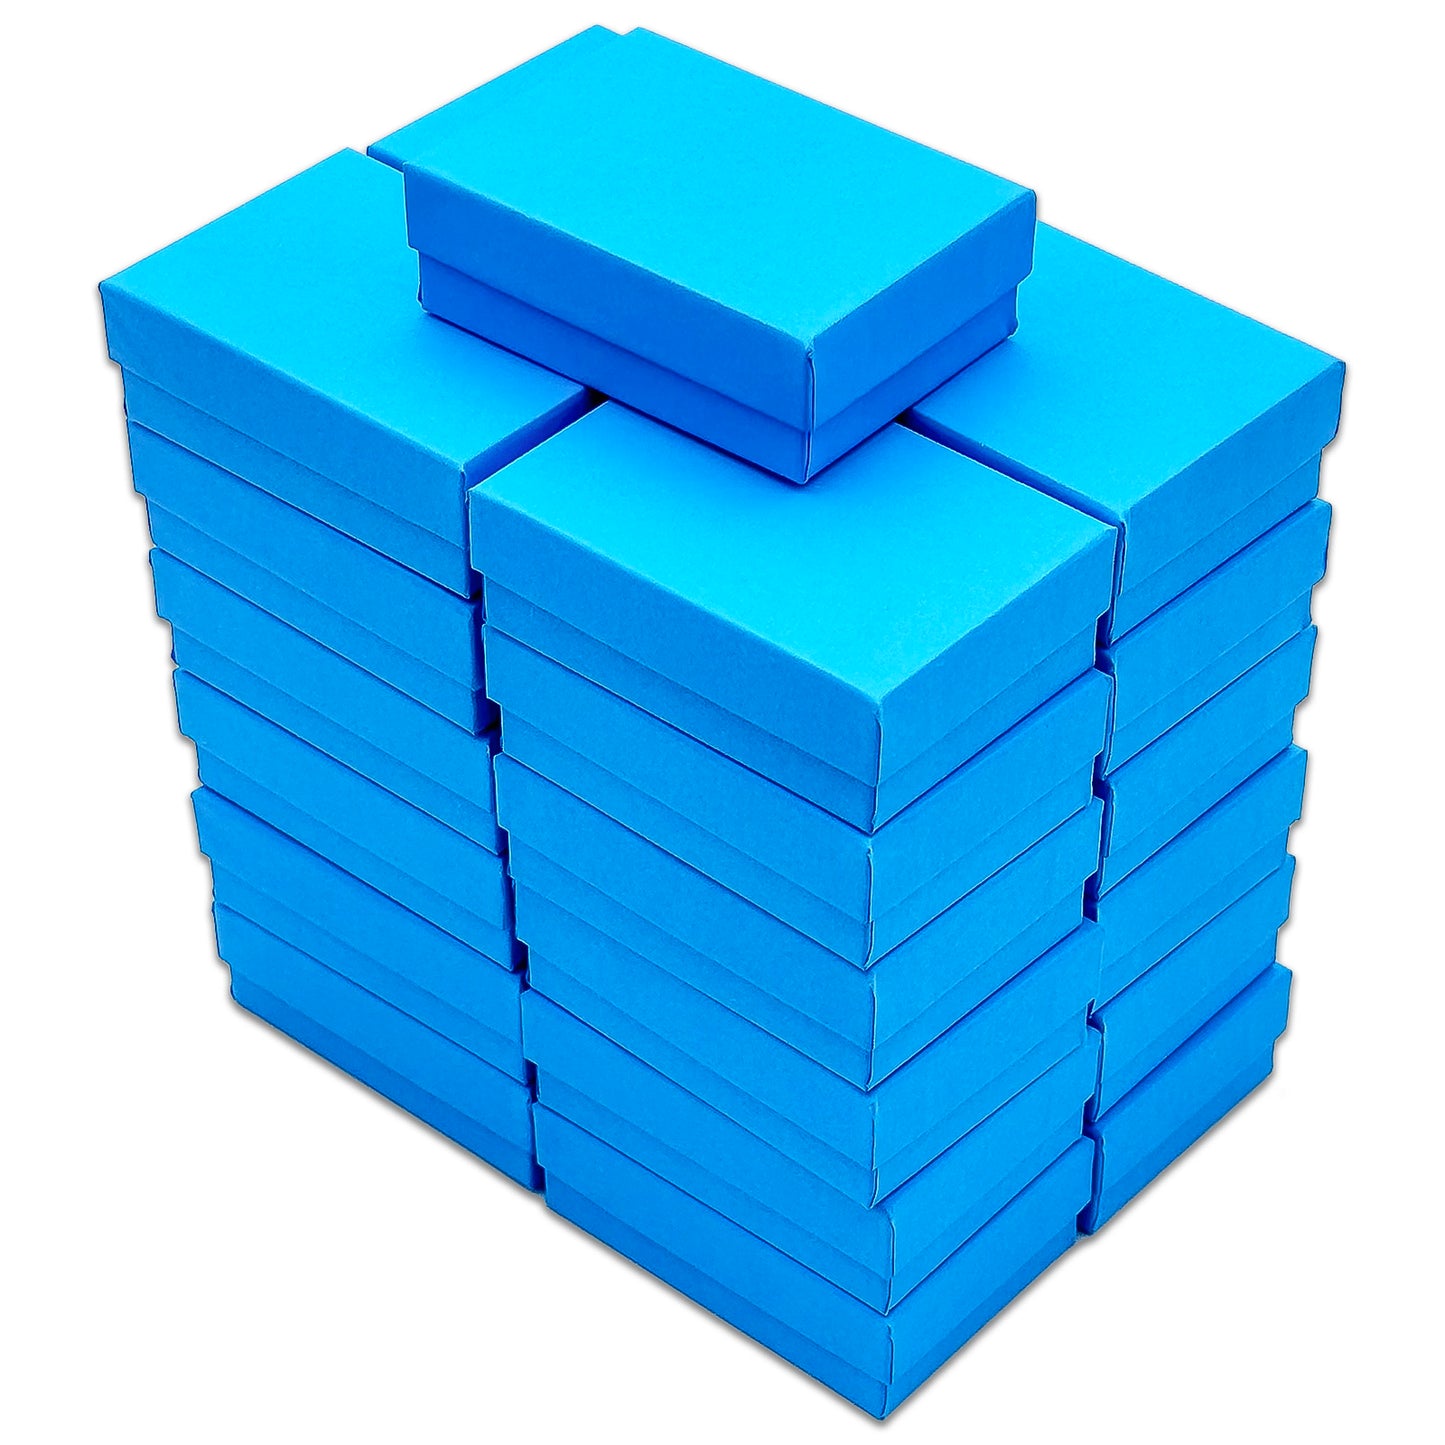 2 5/8" x 1 5/8" x 1" Azure Blue Cotton Filled Paper Box